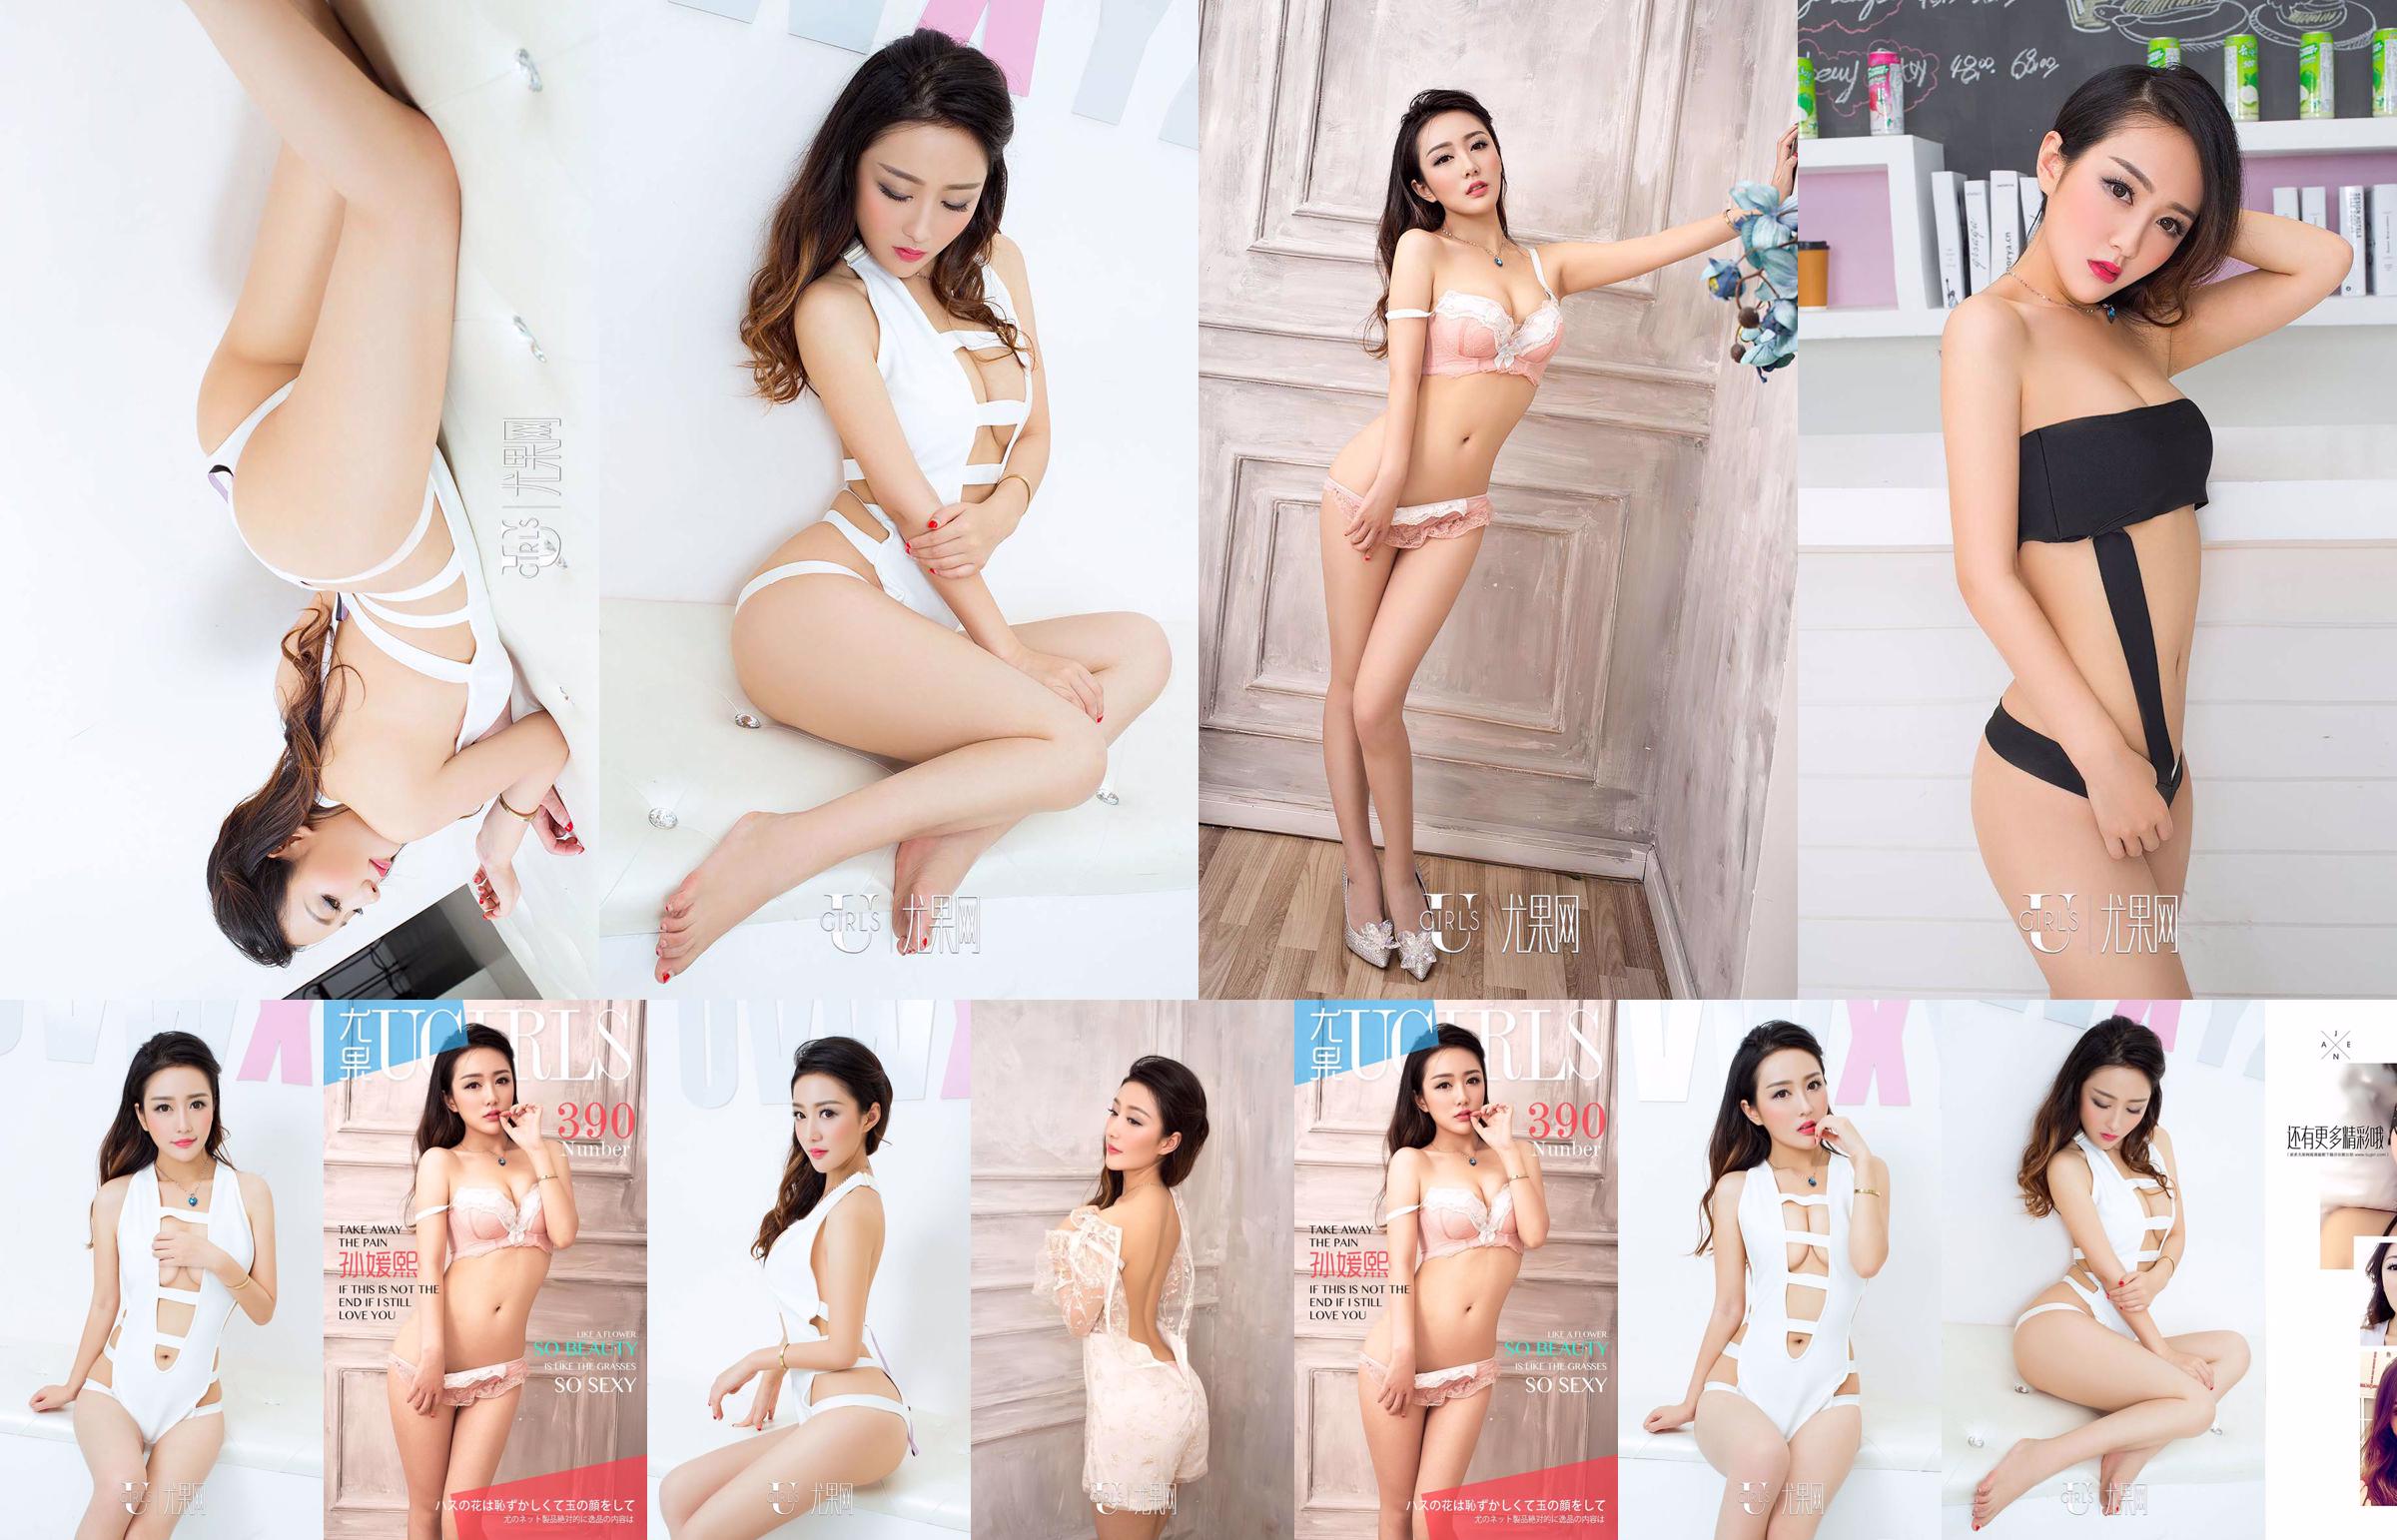 Sun Yuanxi "tão bela tão sexy" [爱 优 物 Ugirls] No.390 No.3722cd Página 3